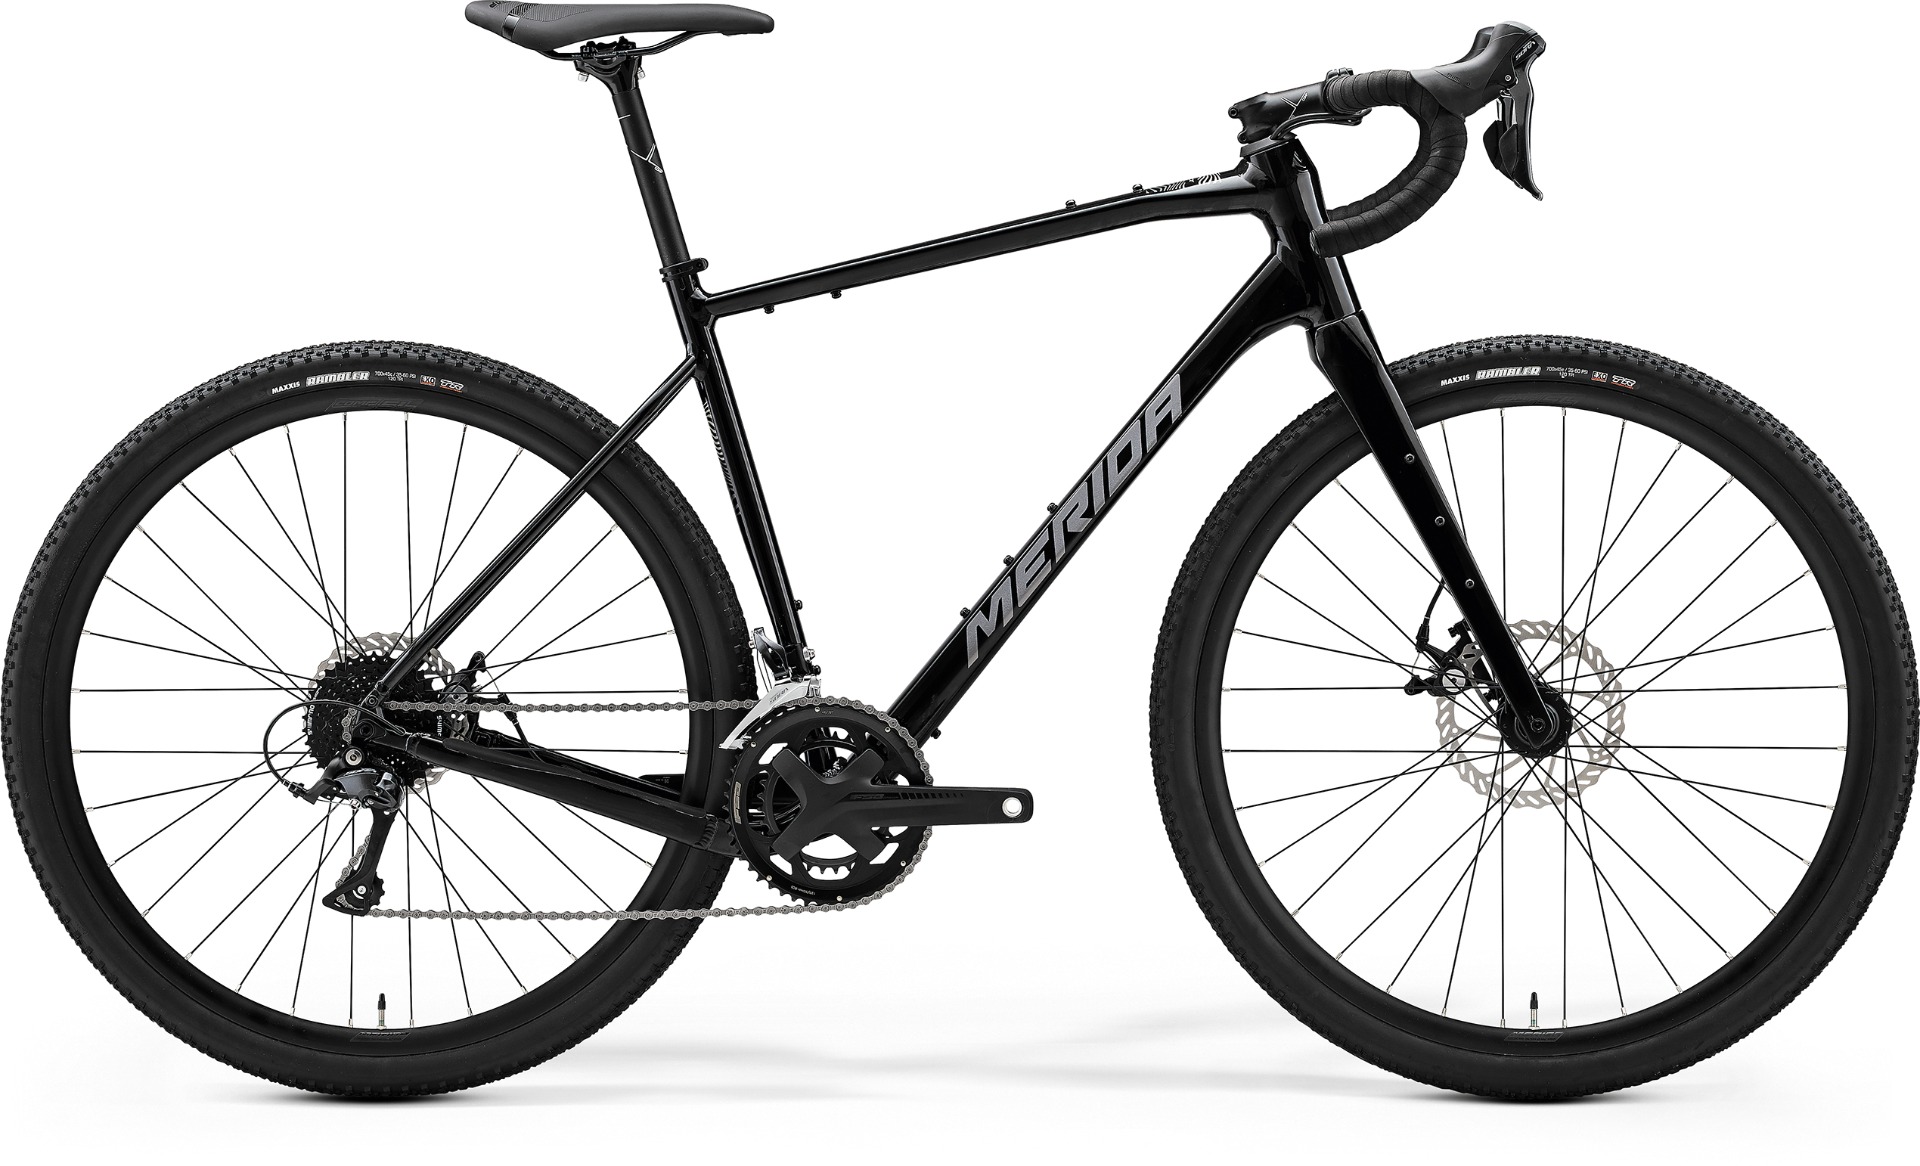 Bicycle Merida SILEX 200 II1 BLACK(GREY/TITAN)